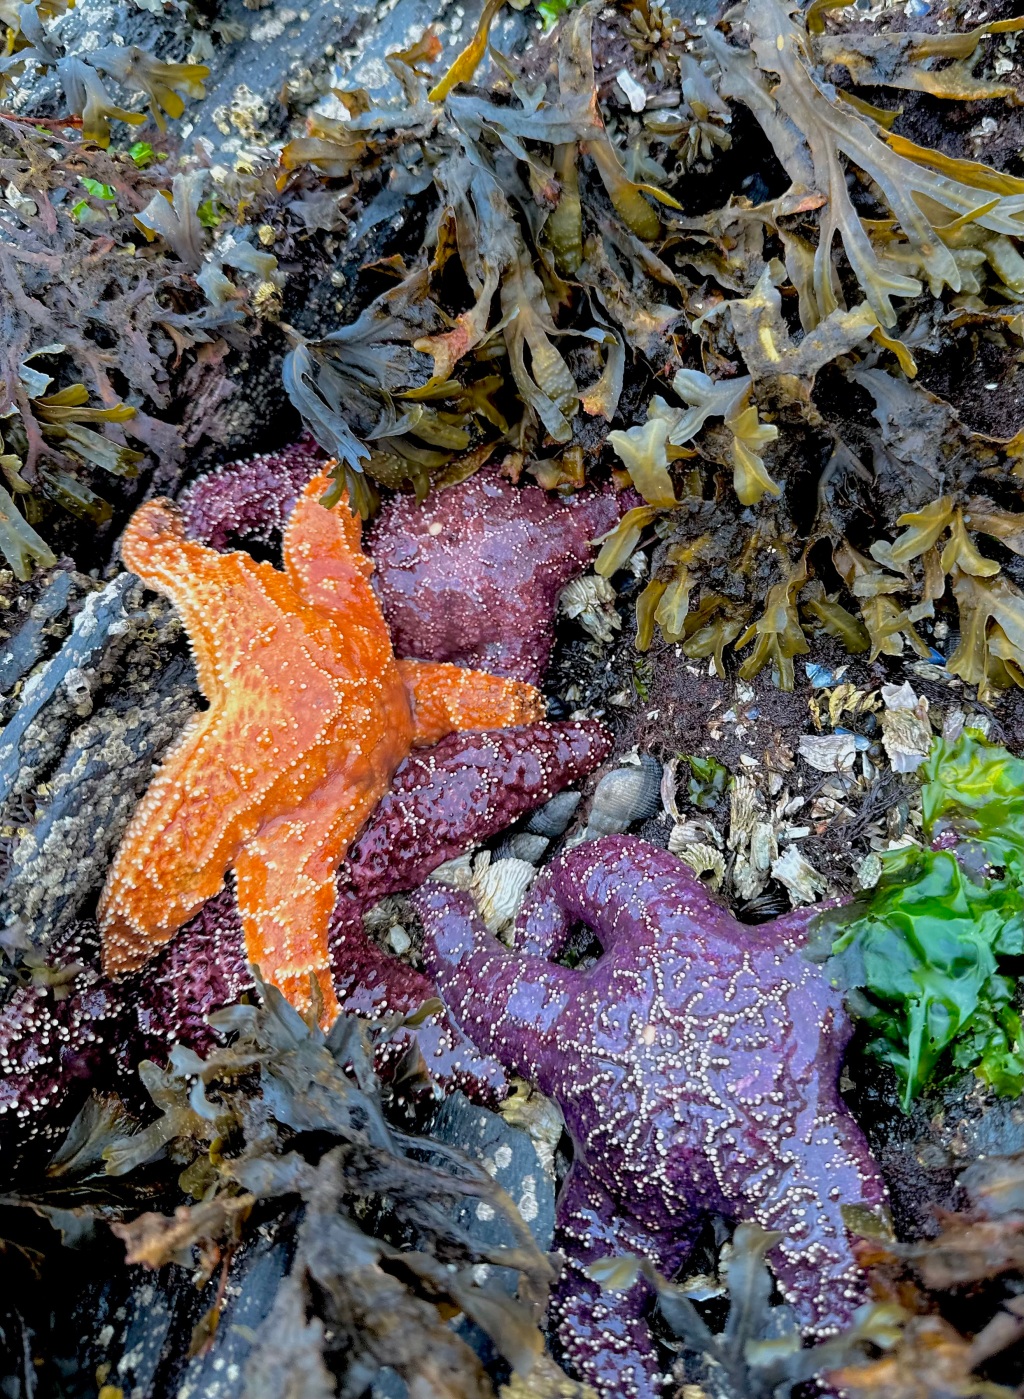 The Pacific Intertidal Keystone: Ochre Sea stars